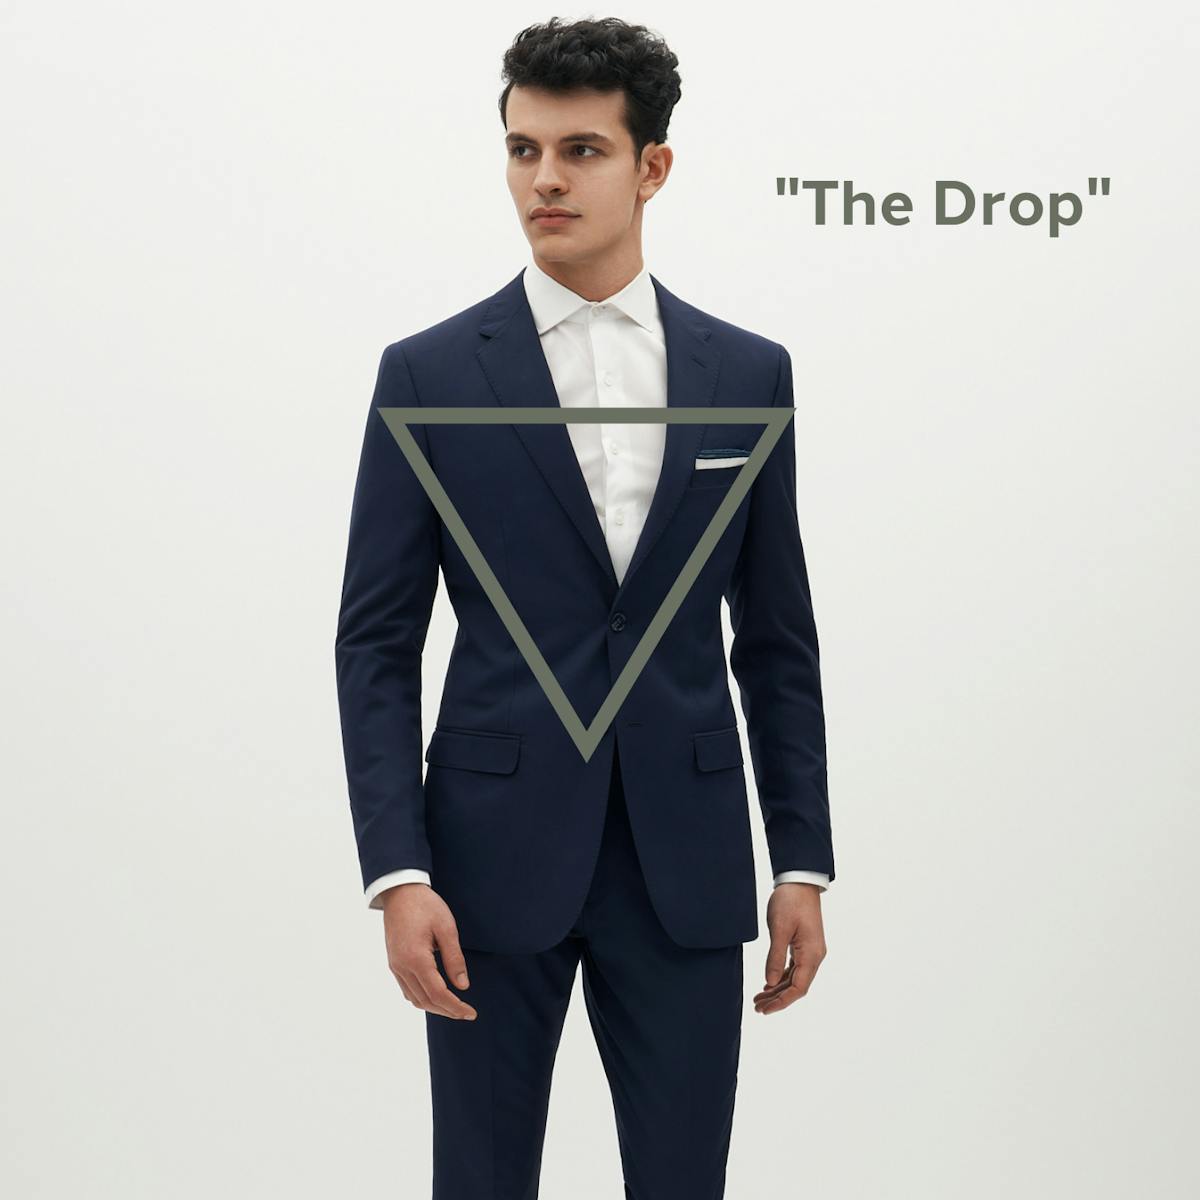 SuitShop  Suits & Tuxedos for Men, Women, & Everyone